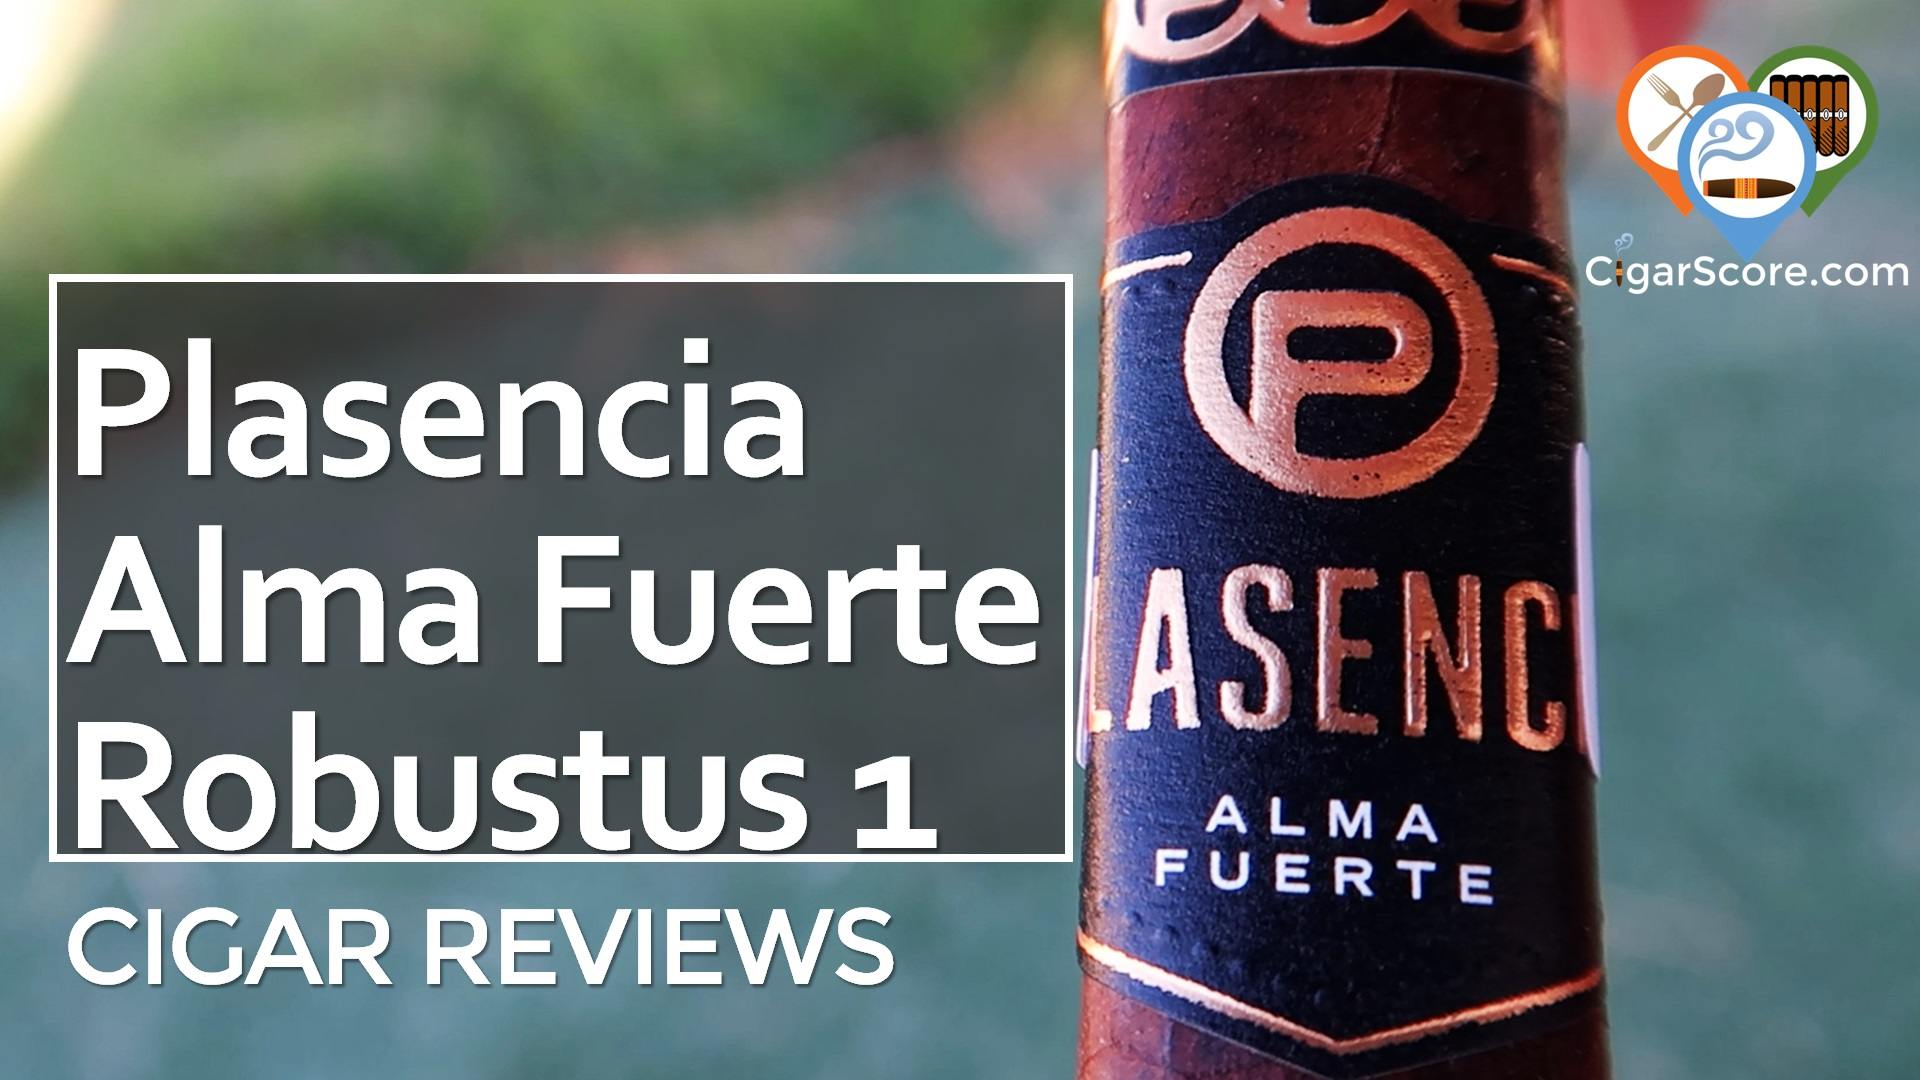 Cigar Review: Plasencia Alma Fuerte Robustus 1